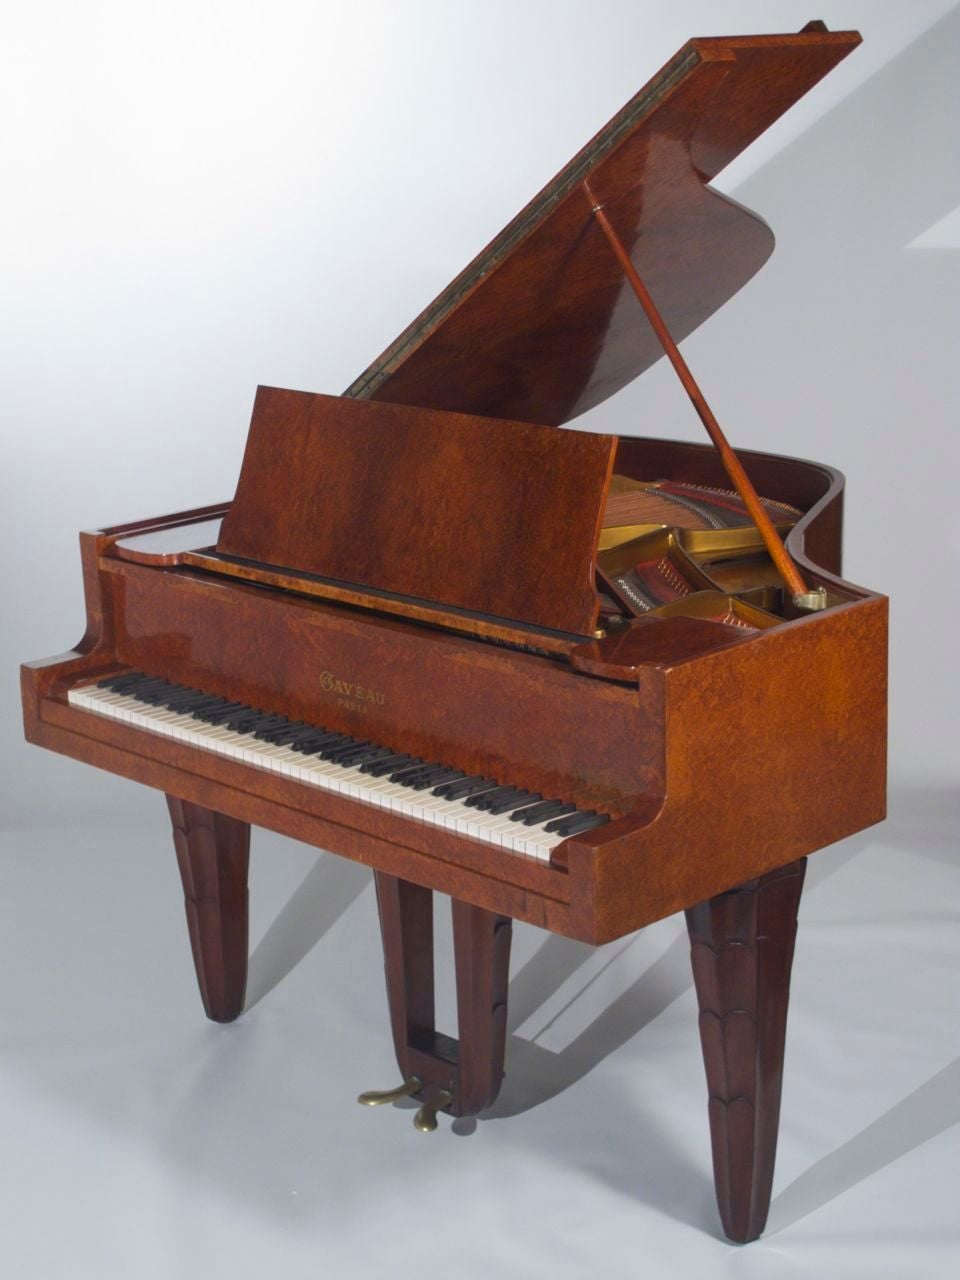 Maurice Dufrene 1925 Paris Expo Piano